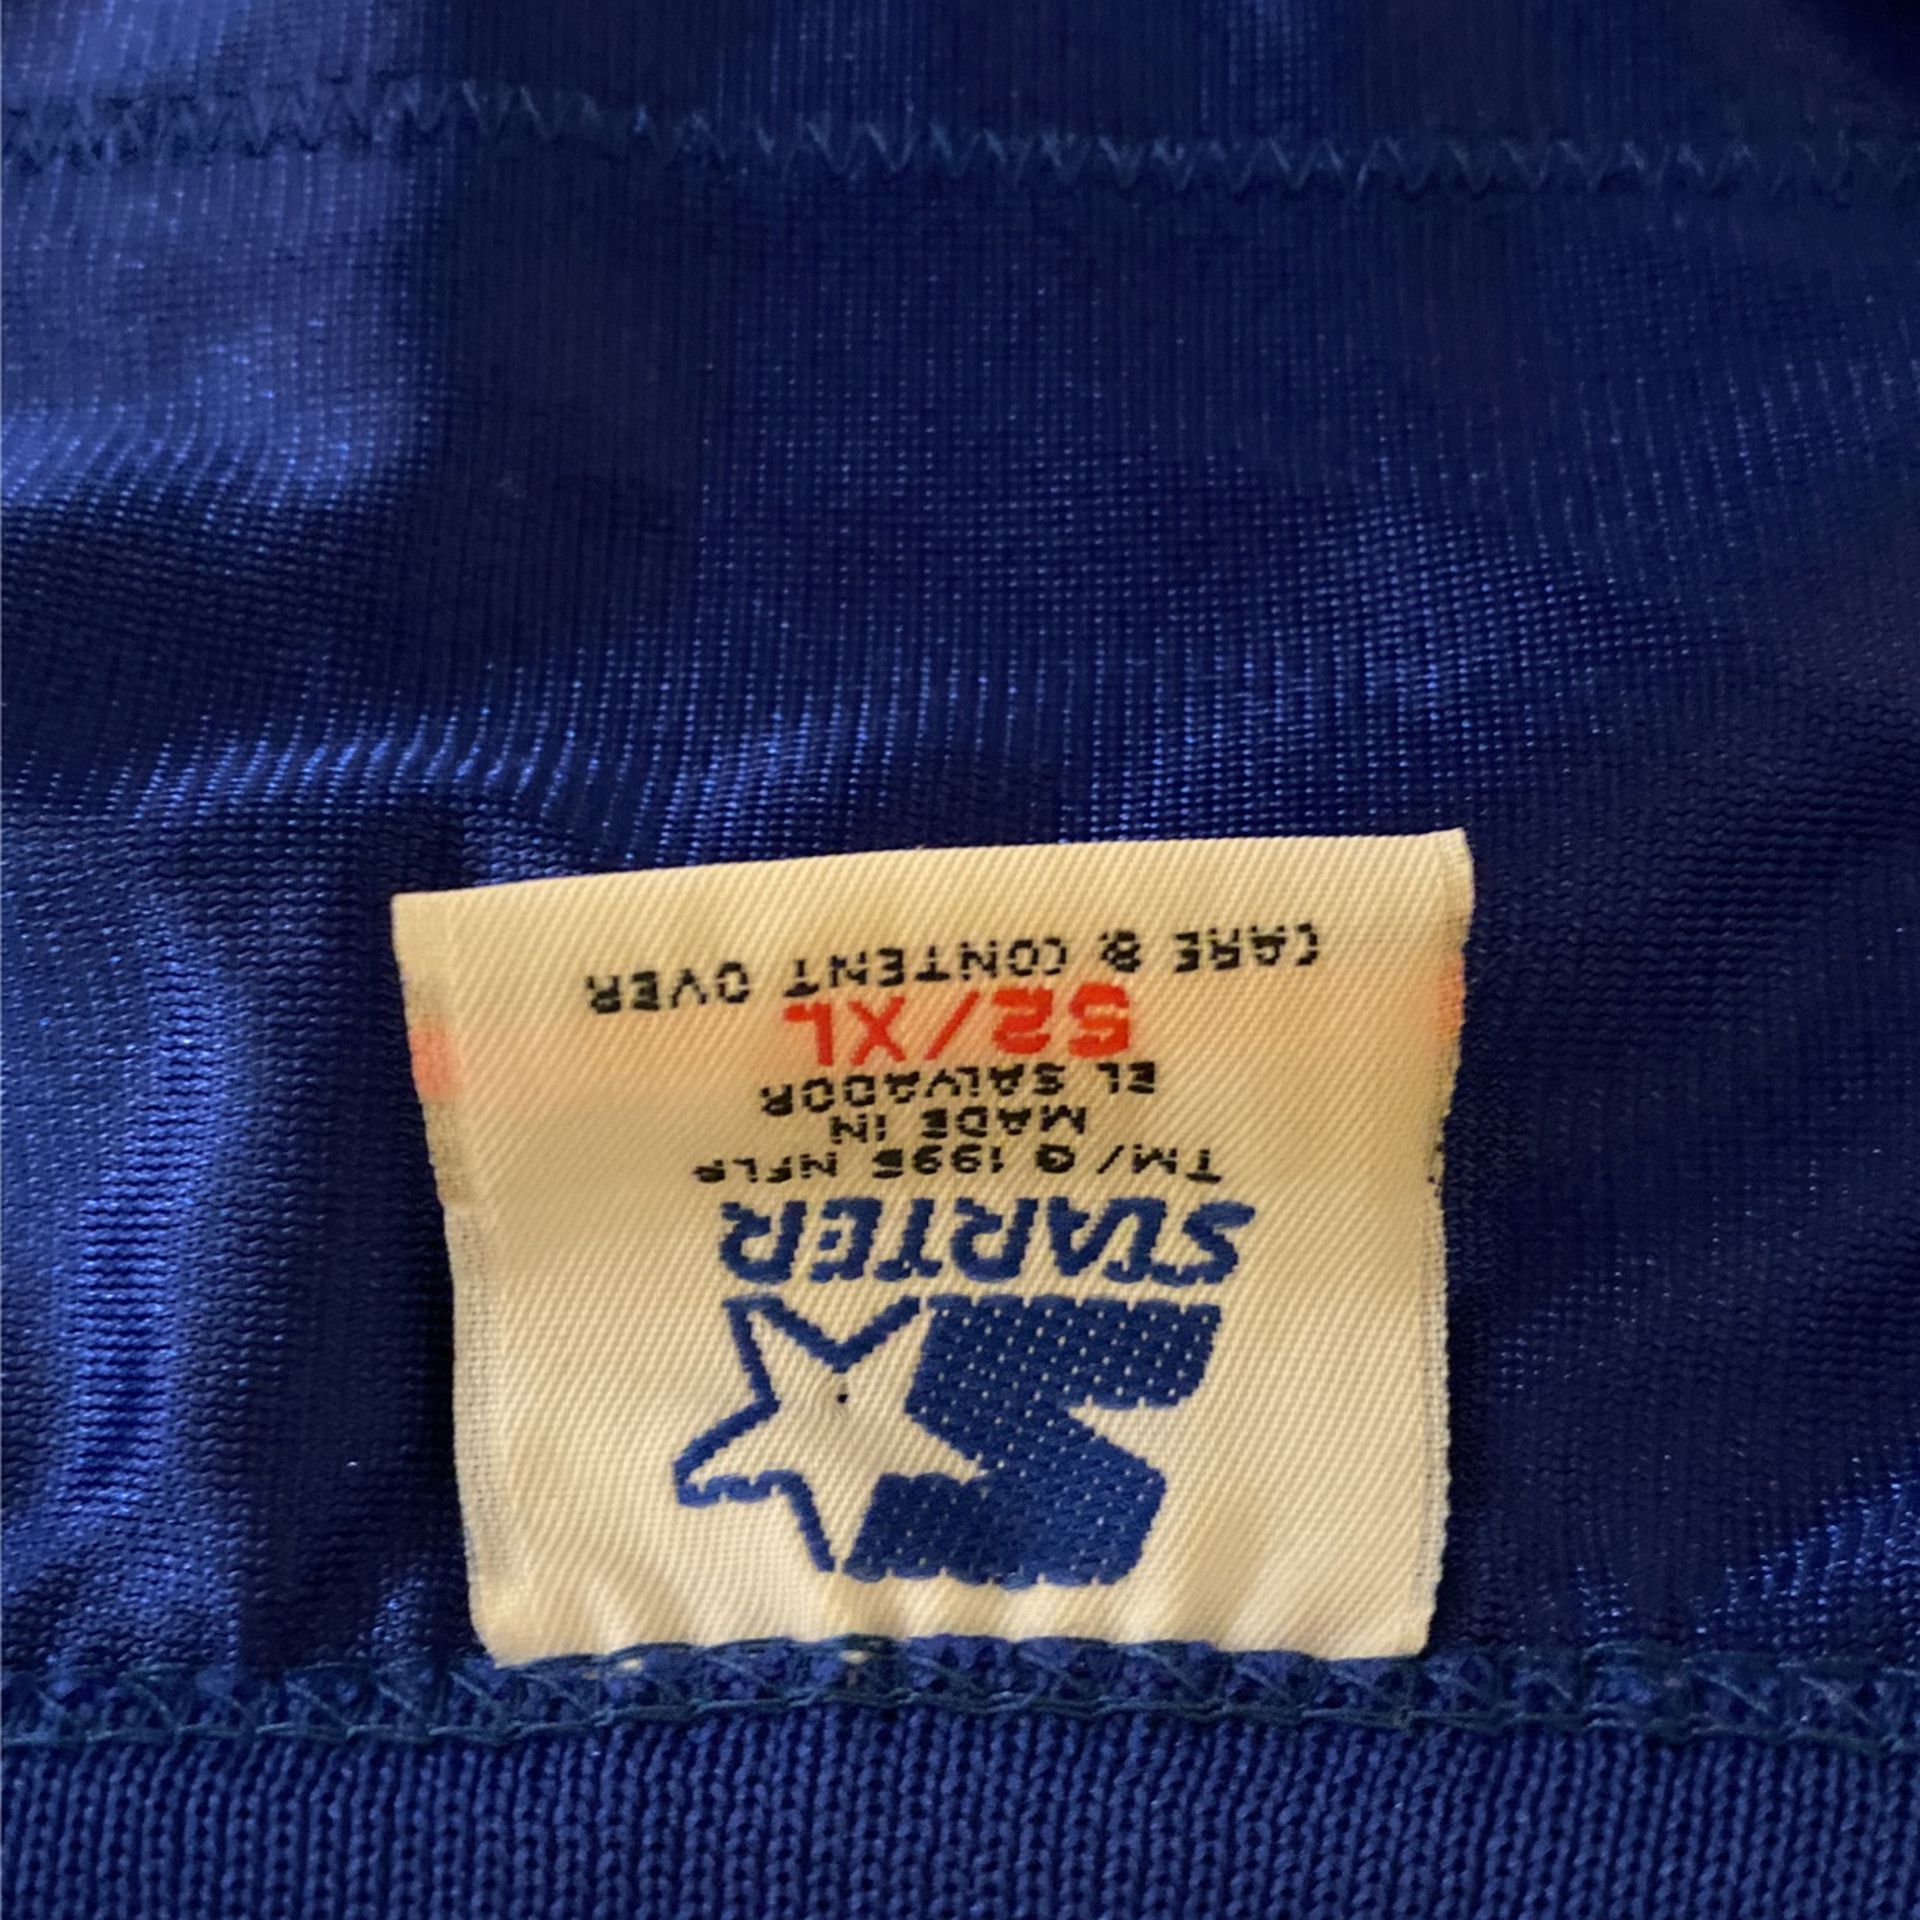 Vintage 1998 New England Patriots jersey